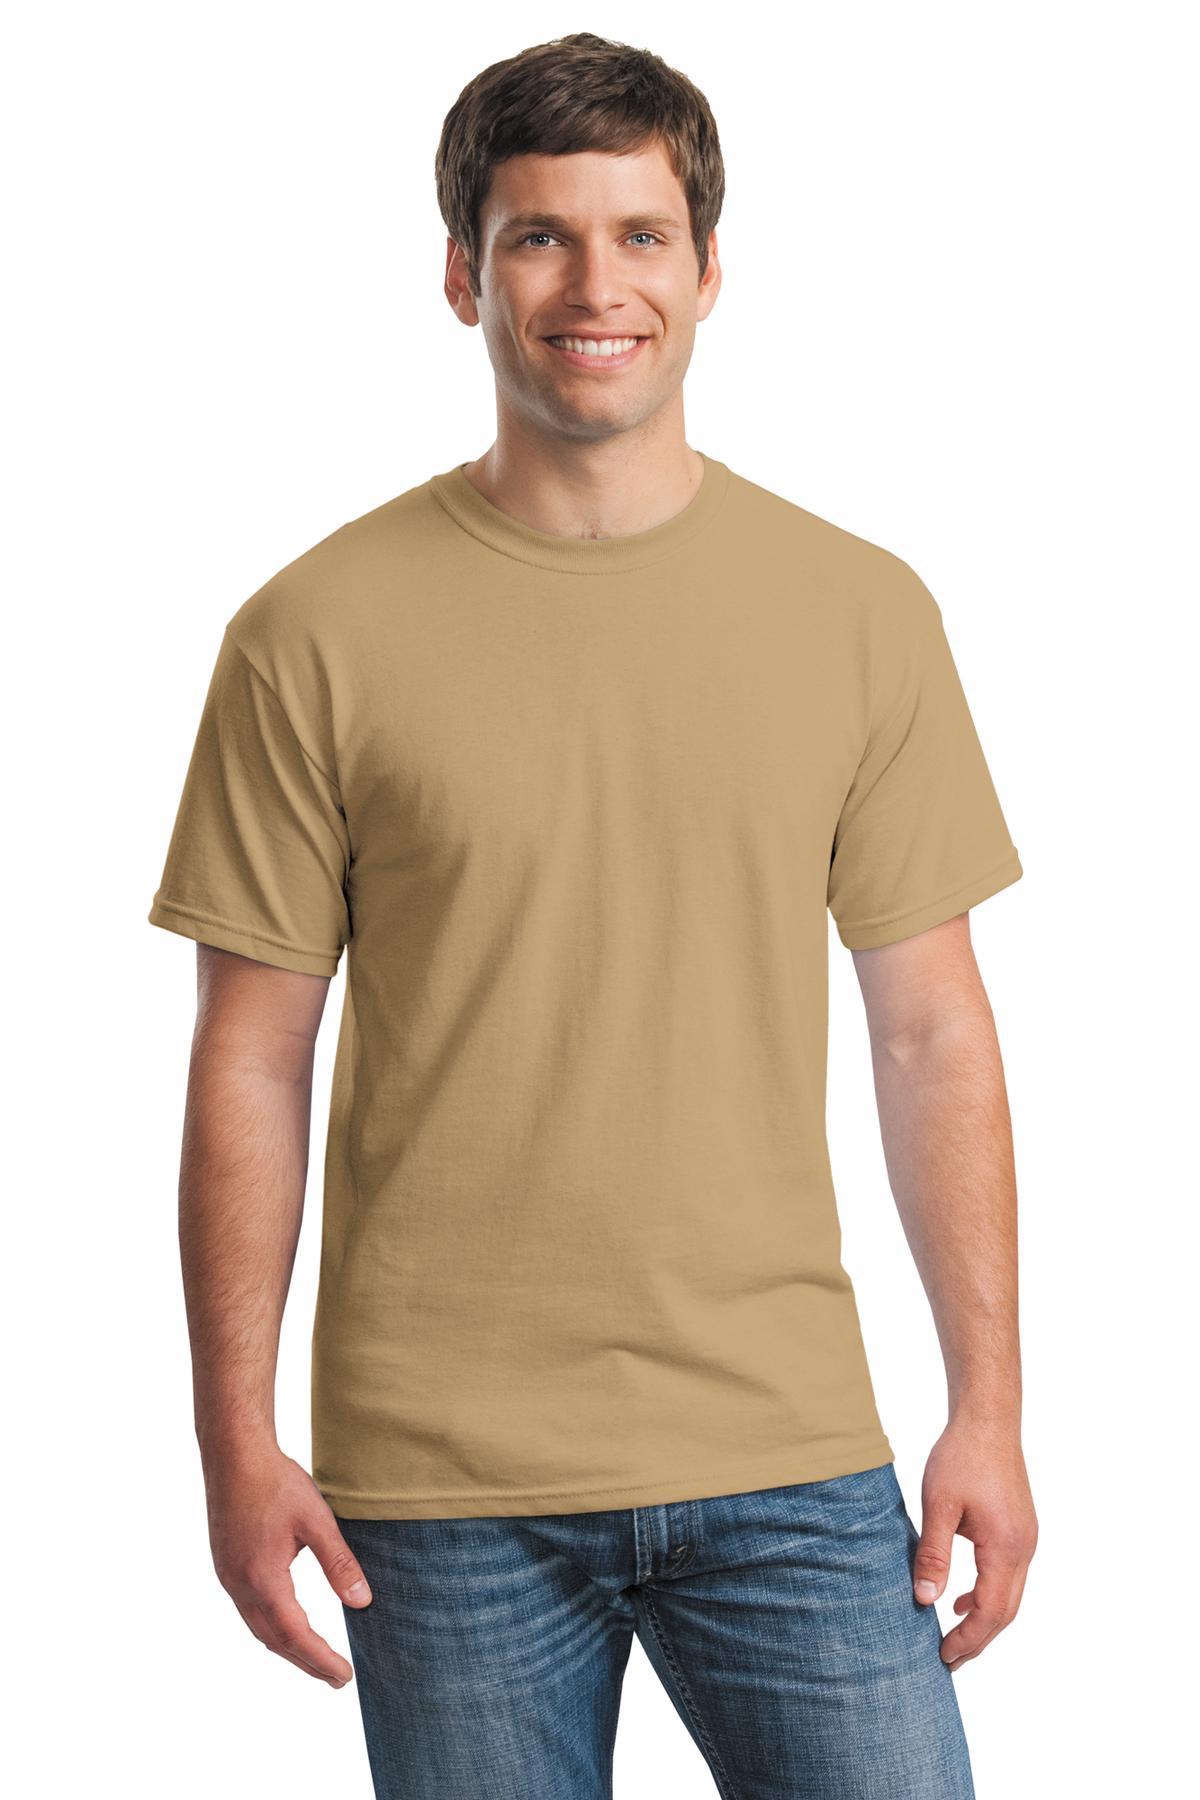 NEW Gildan Mens Plain Blank Solid Cotton Short Sleeve T-shirt Tee S M L XL G500 